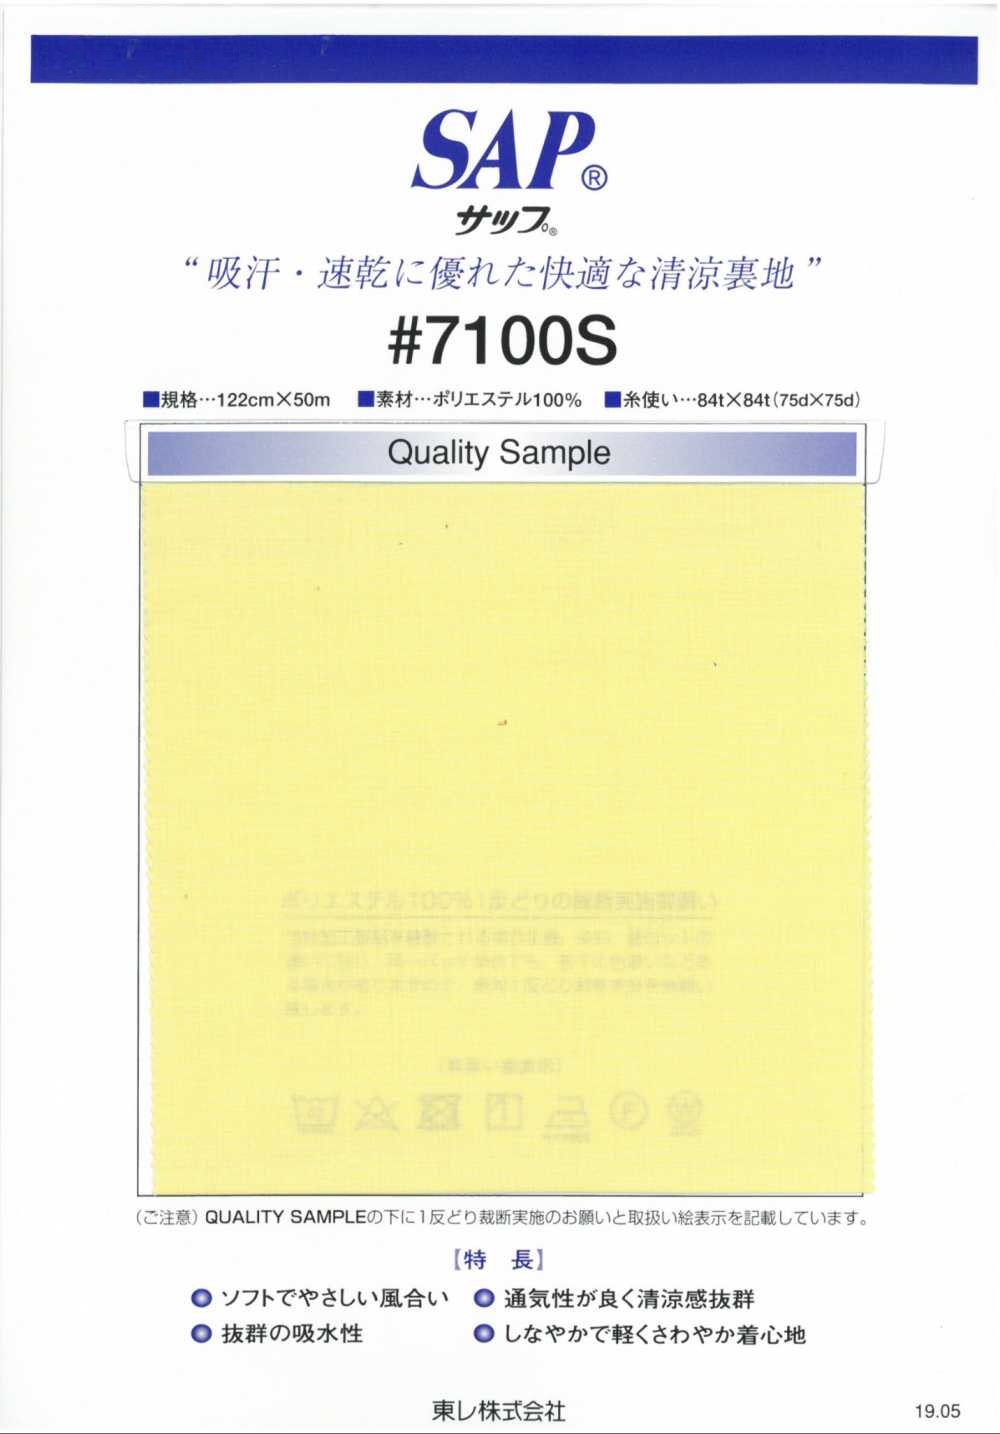 7100S SAP Refreshing Lining (Sweat Absorption, Quick Drying) TORAY